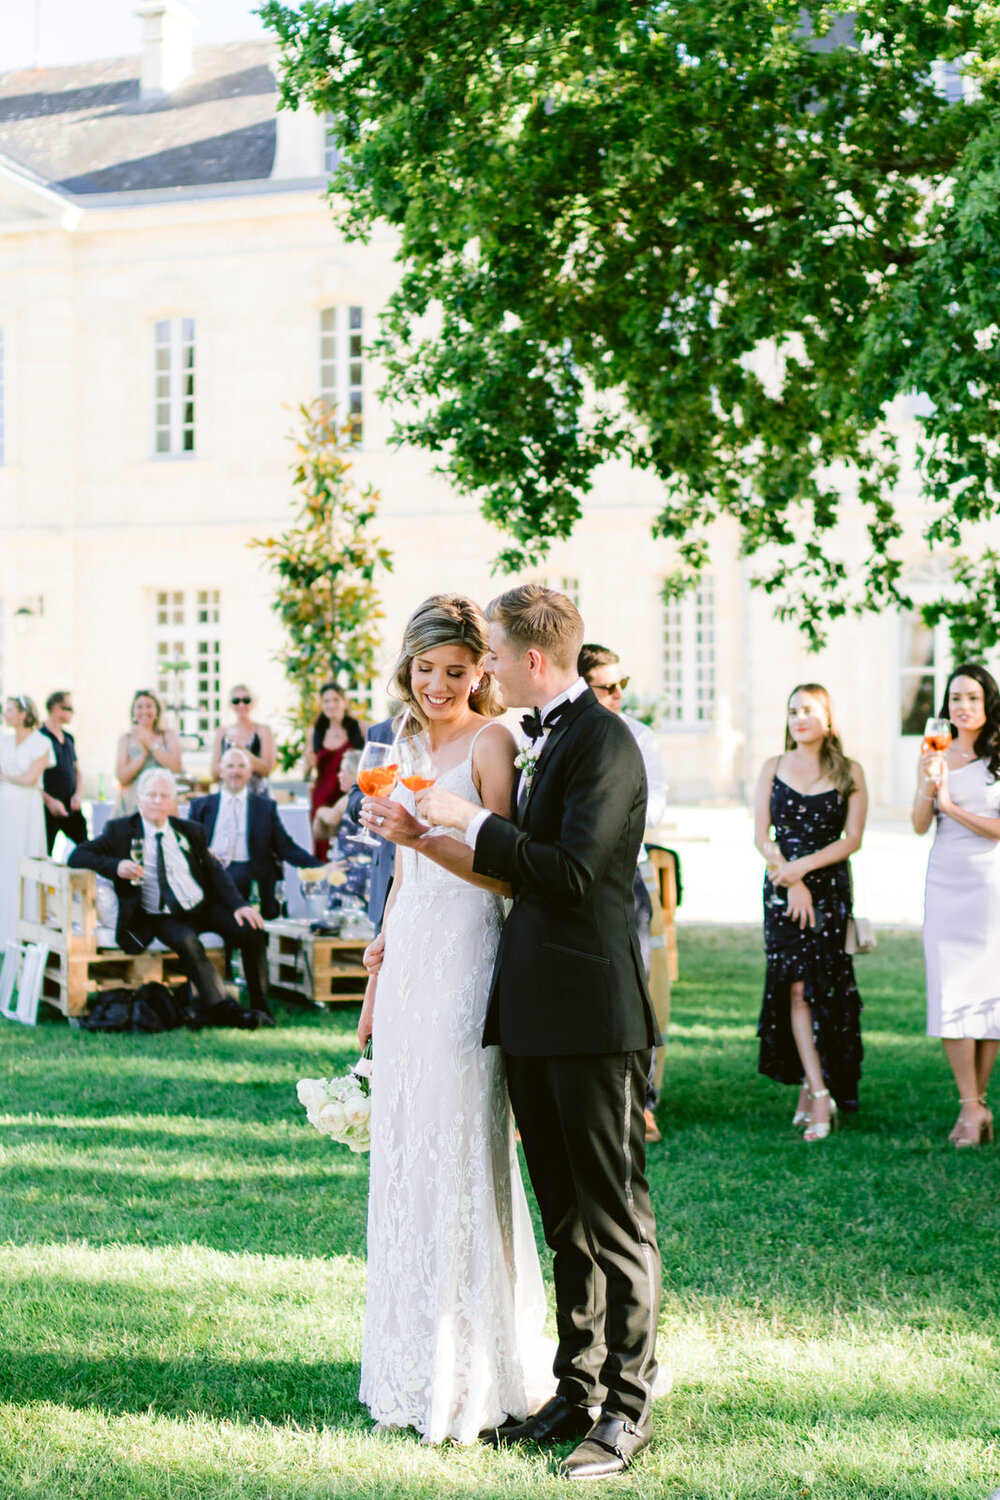 Chateau Soutard wedding, Bordeaux wedding photographer, St Emillion wedding in France, outdoor wedding in France-154.jpg